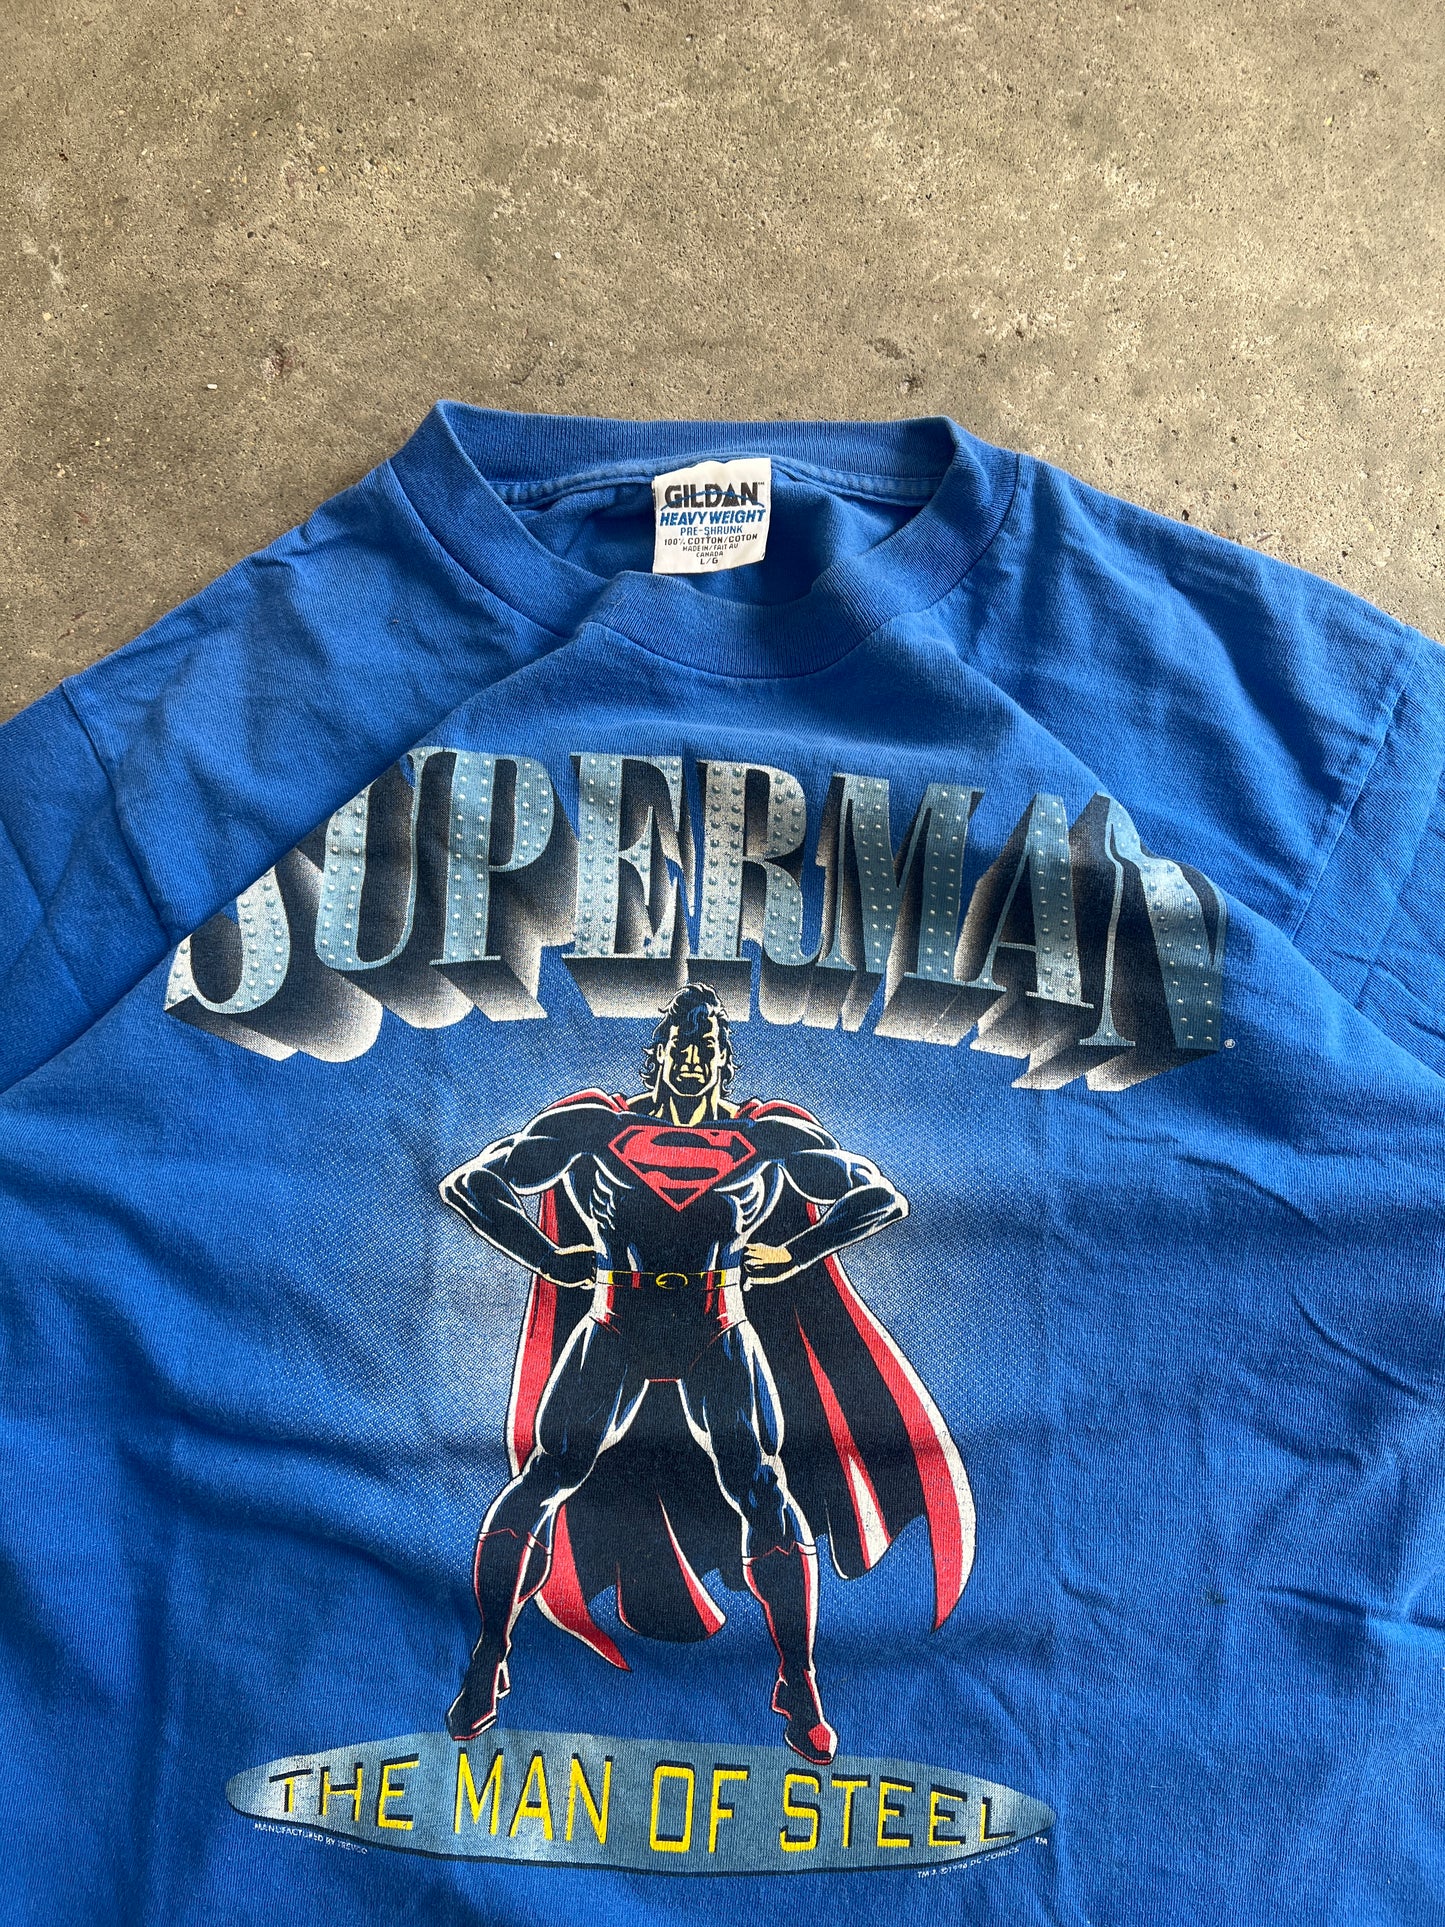 Vintage Superman Shirt - L